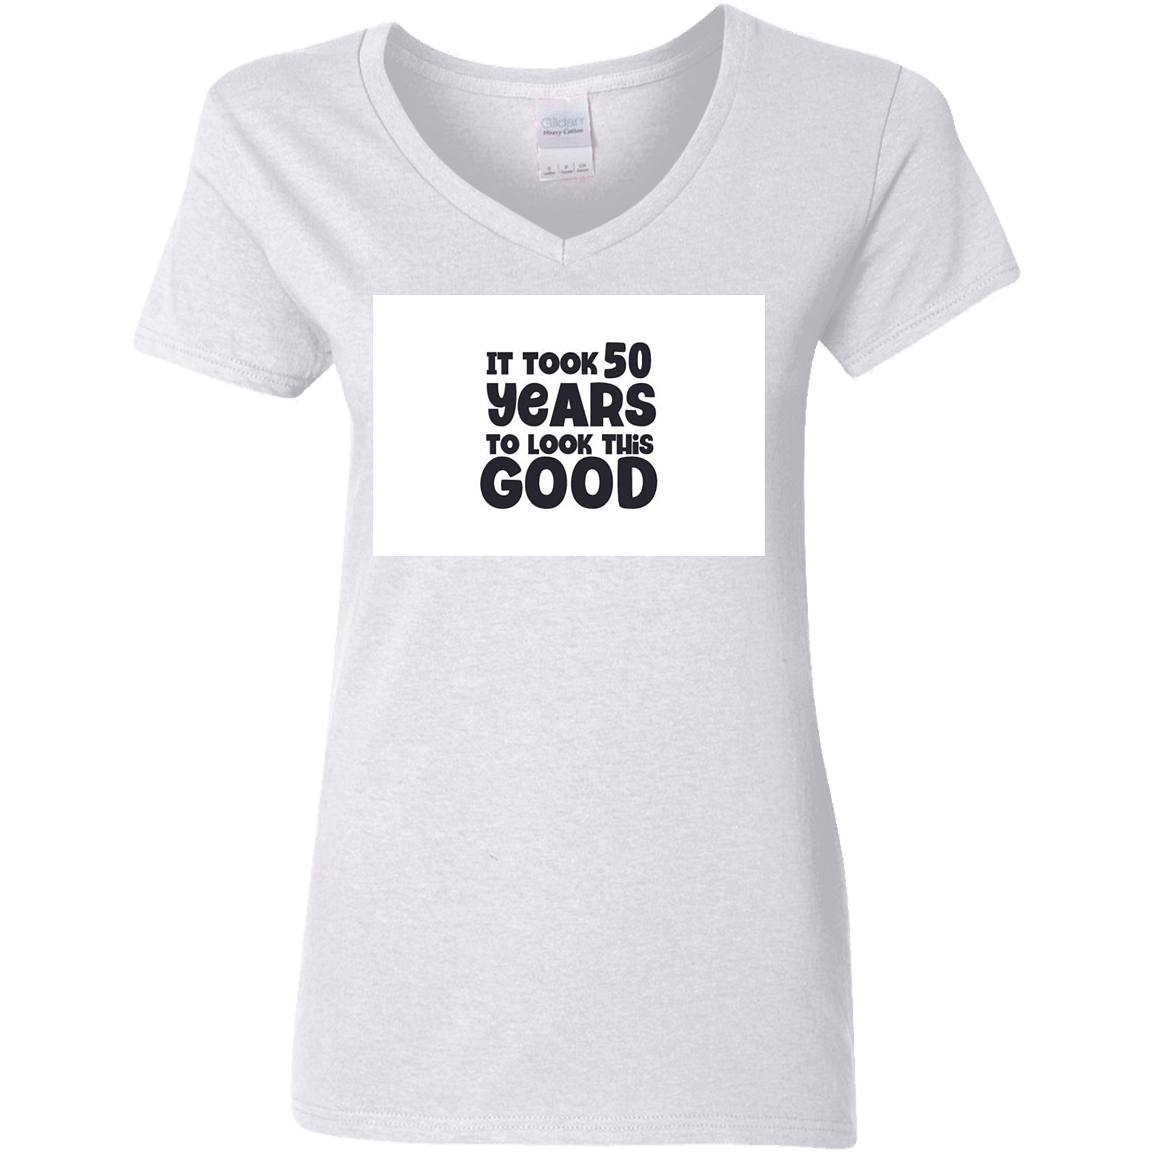 G500VL Ladies' 5.3 oz. V-Neck T-Shirt